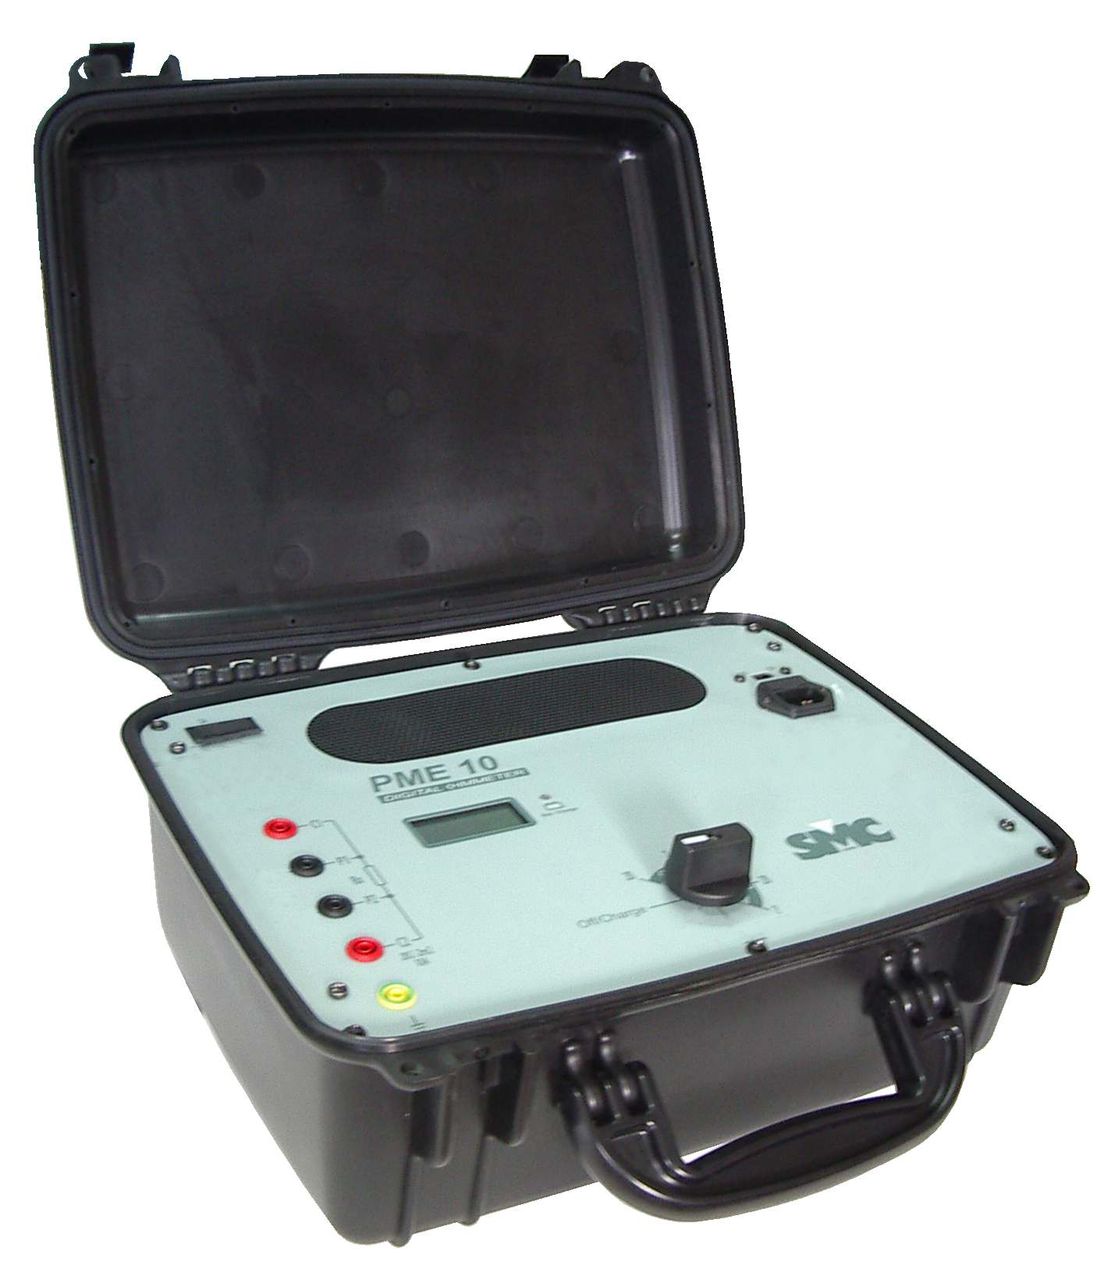  PME-10 Цифровой микроомметр 10А от компании Tectron